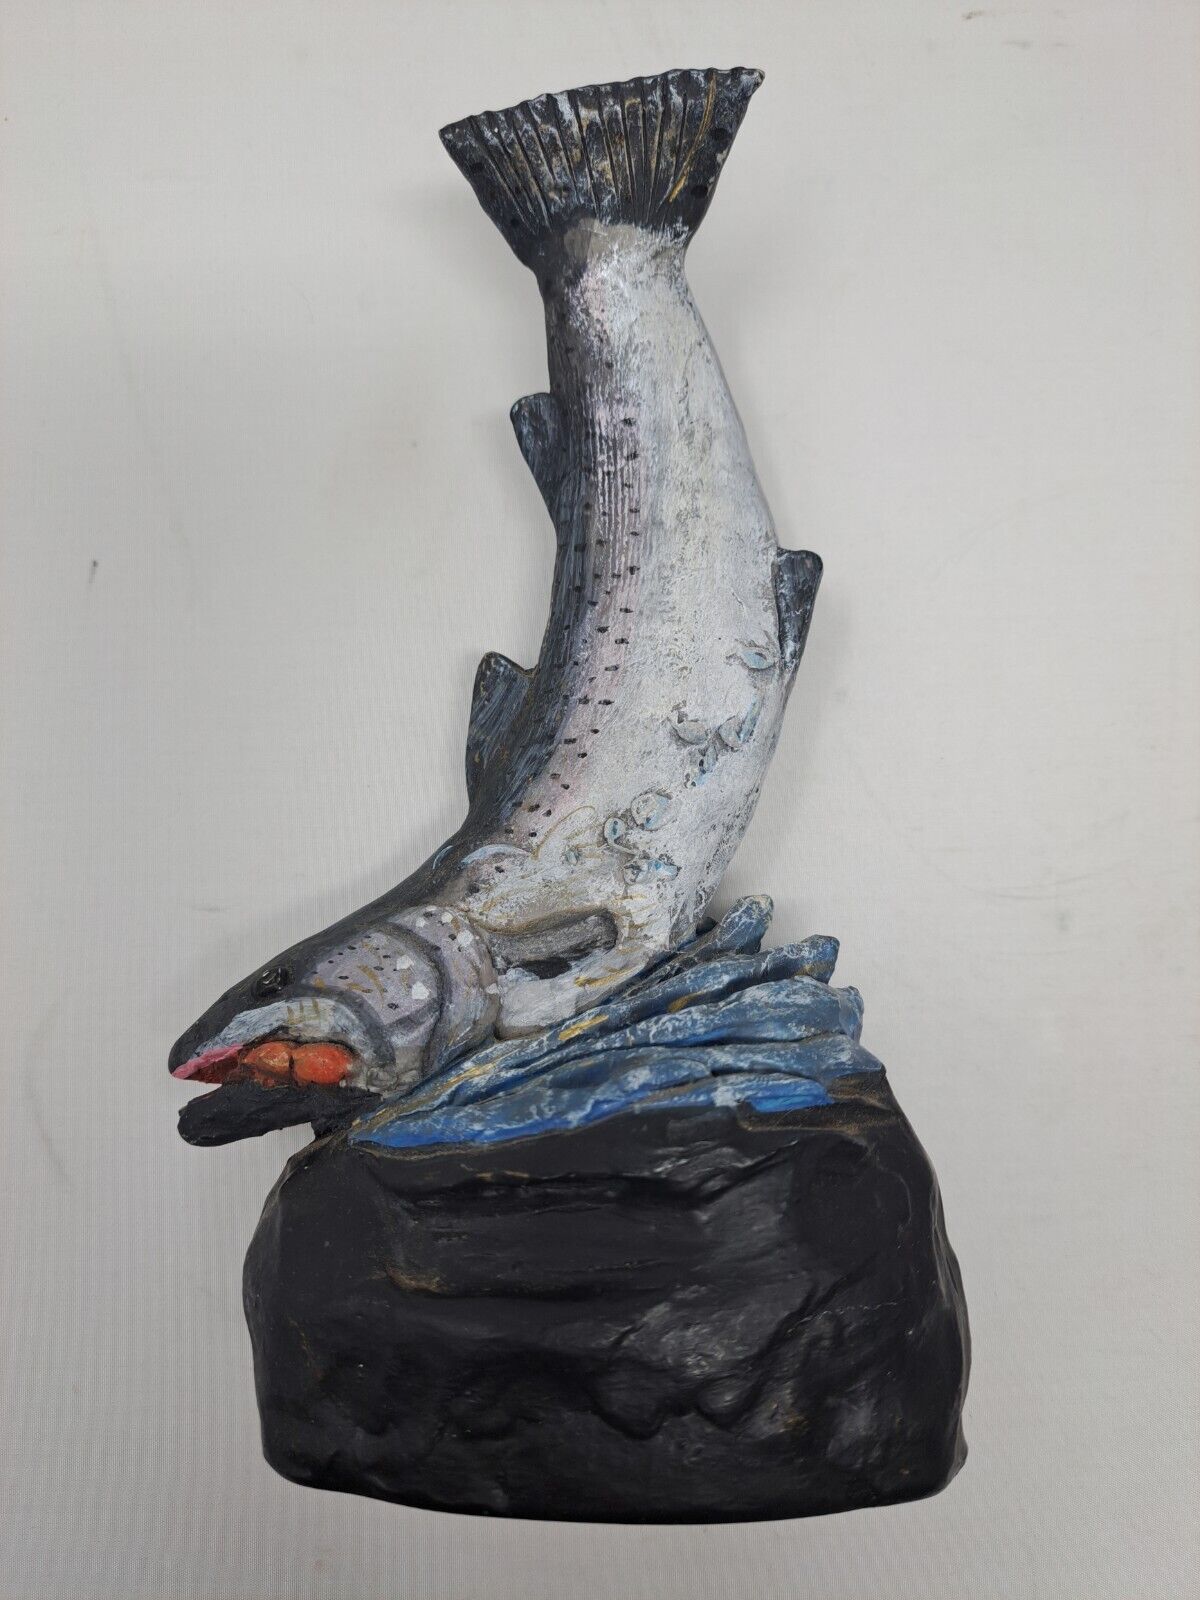 Rare Rapala Collectibles Takin’ Line Limited Edition No. 2517/3000 Fish Figurine